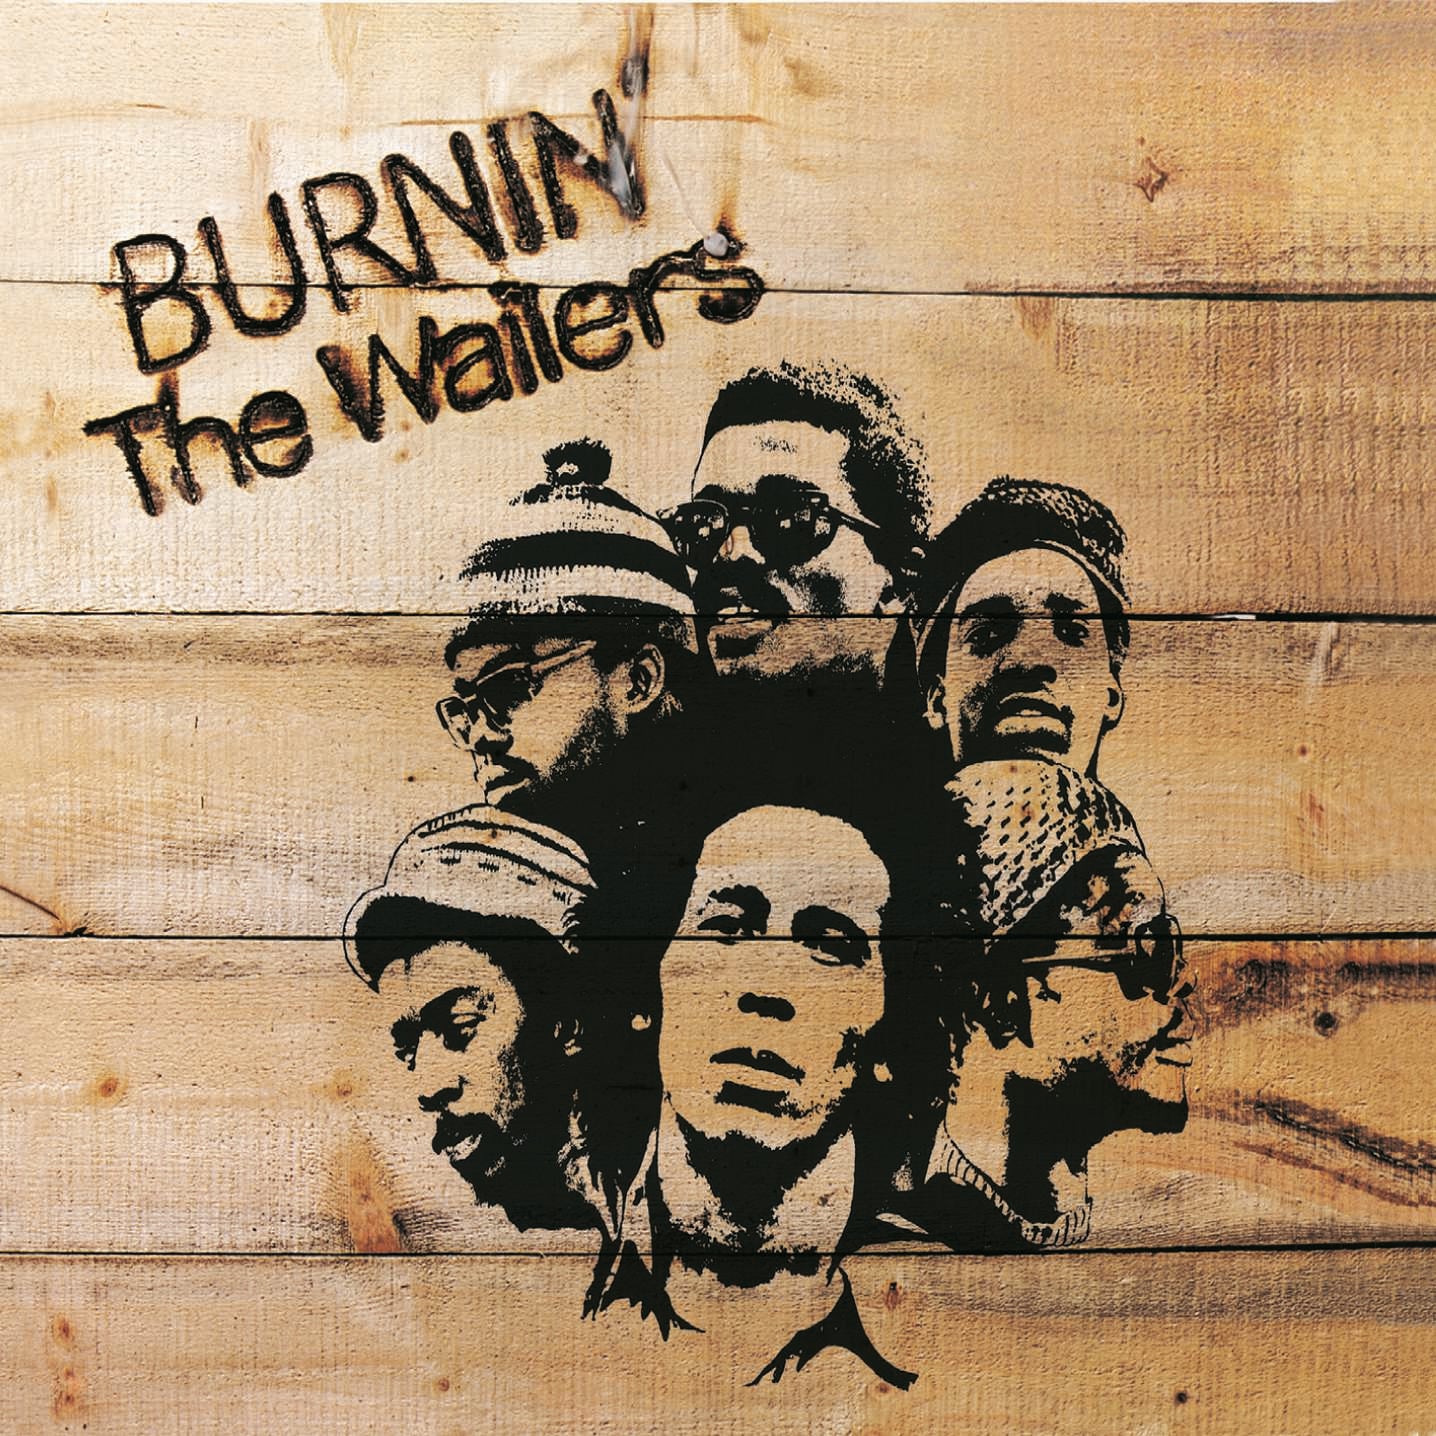 Burnin' - Bob Marley and The Wailers